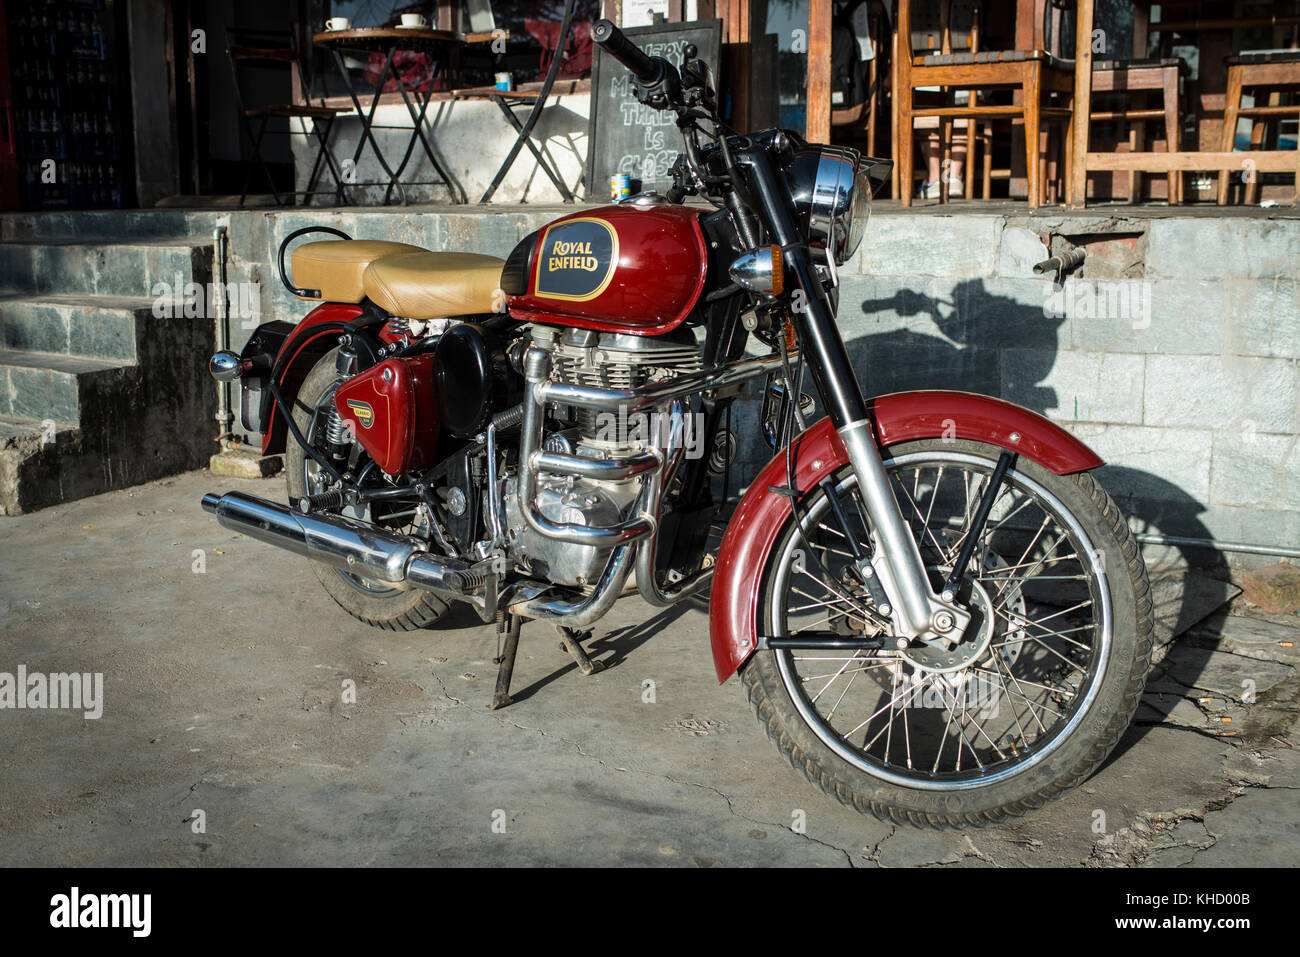 Royal Enfield motorcycle, India Stock Photo